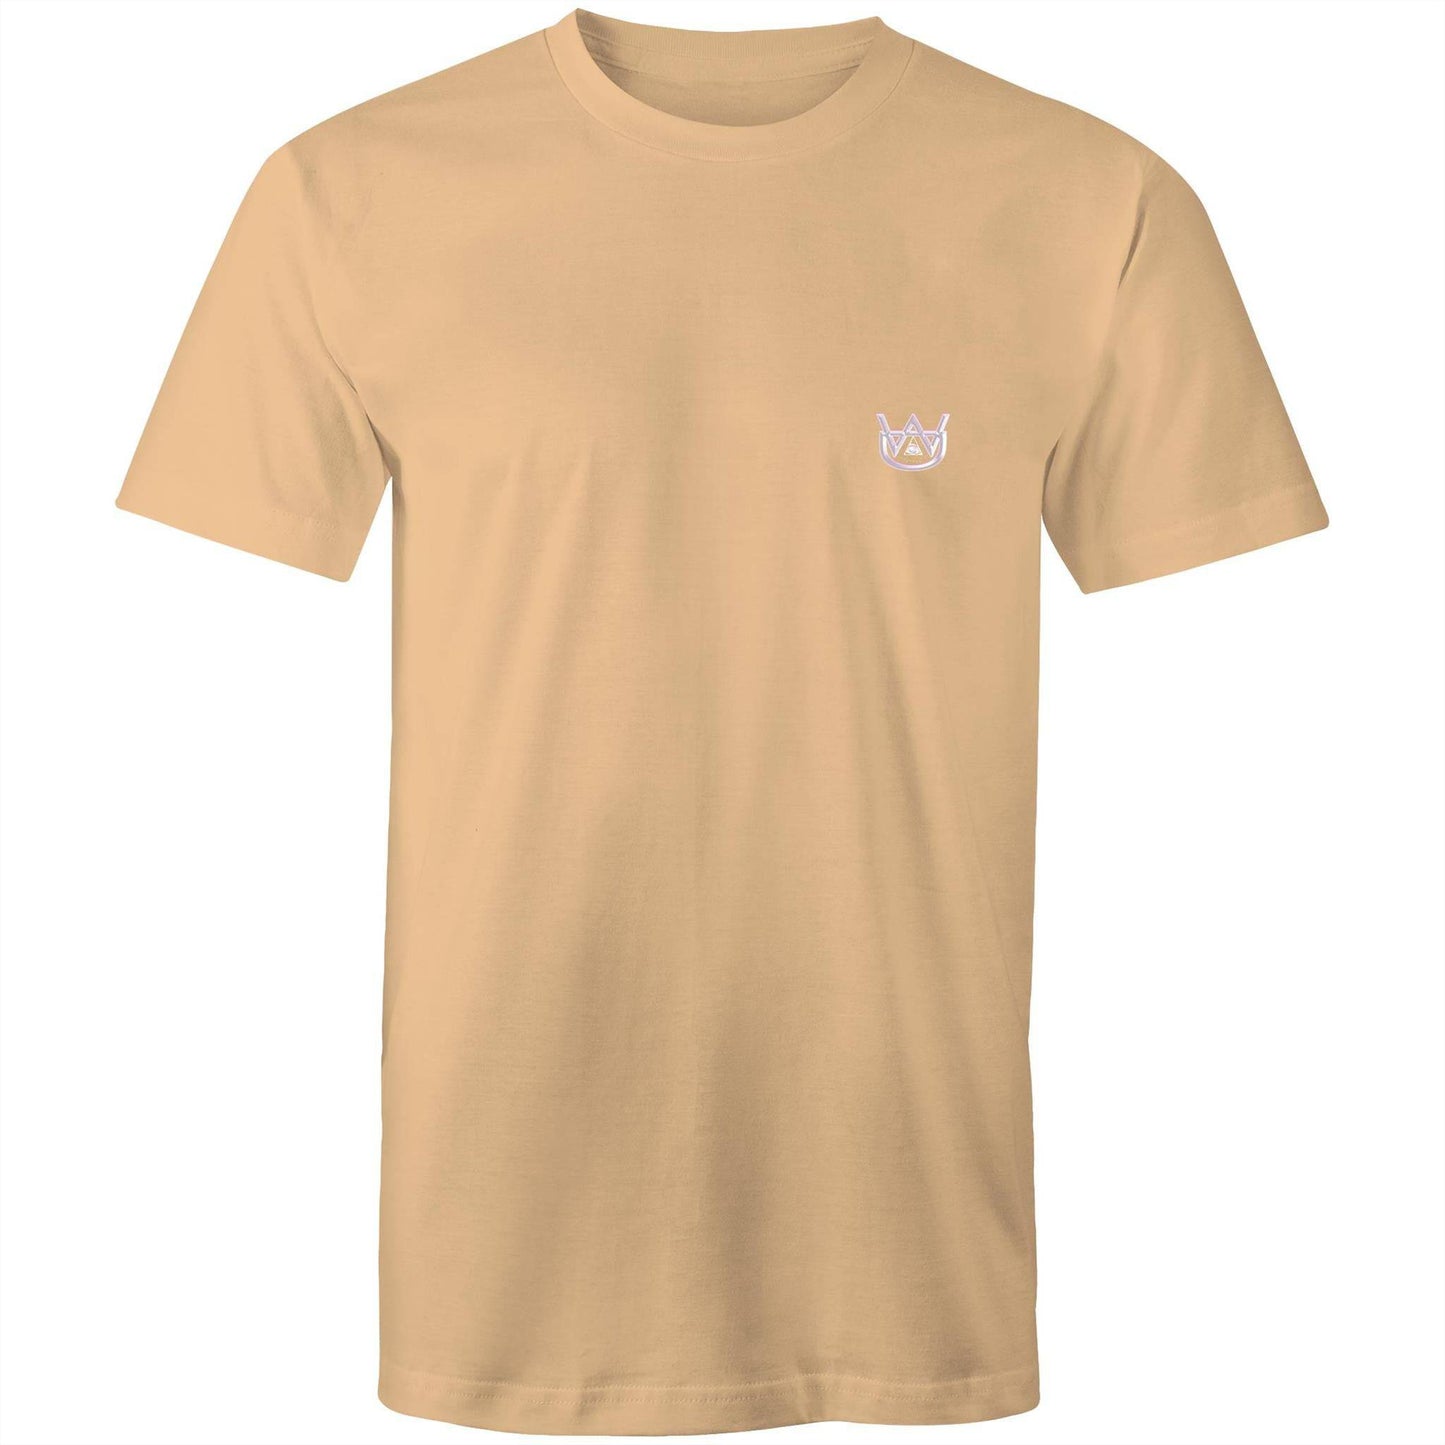 SEEINGEYE DW - Mens T-Shirts - DITCHWORLD